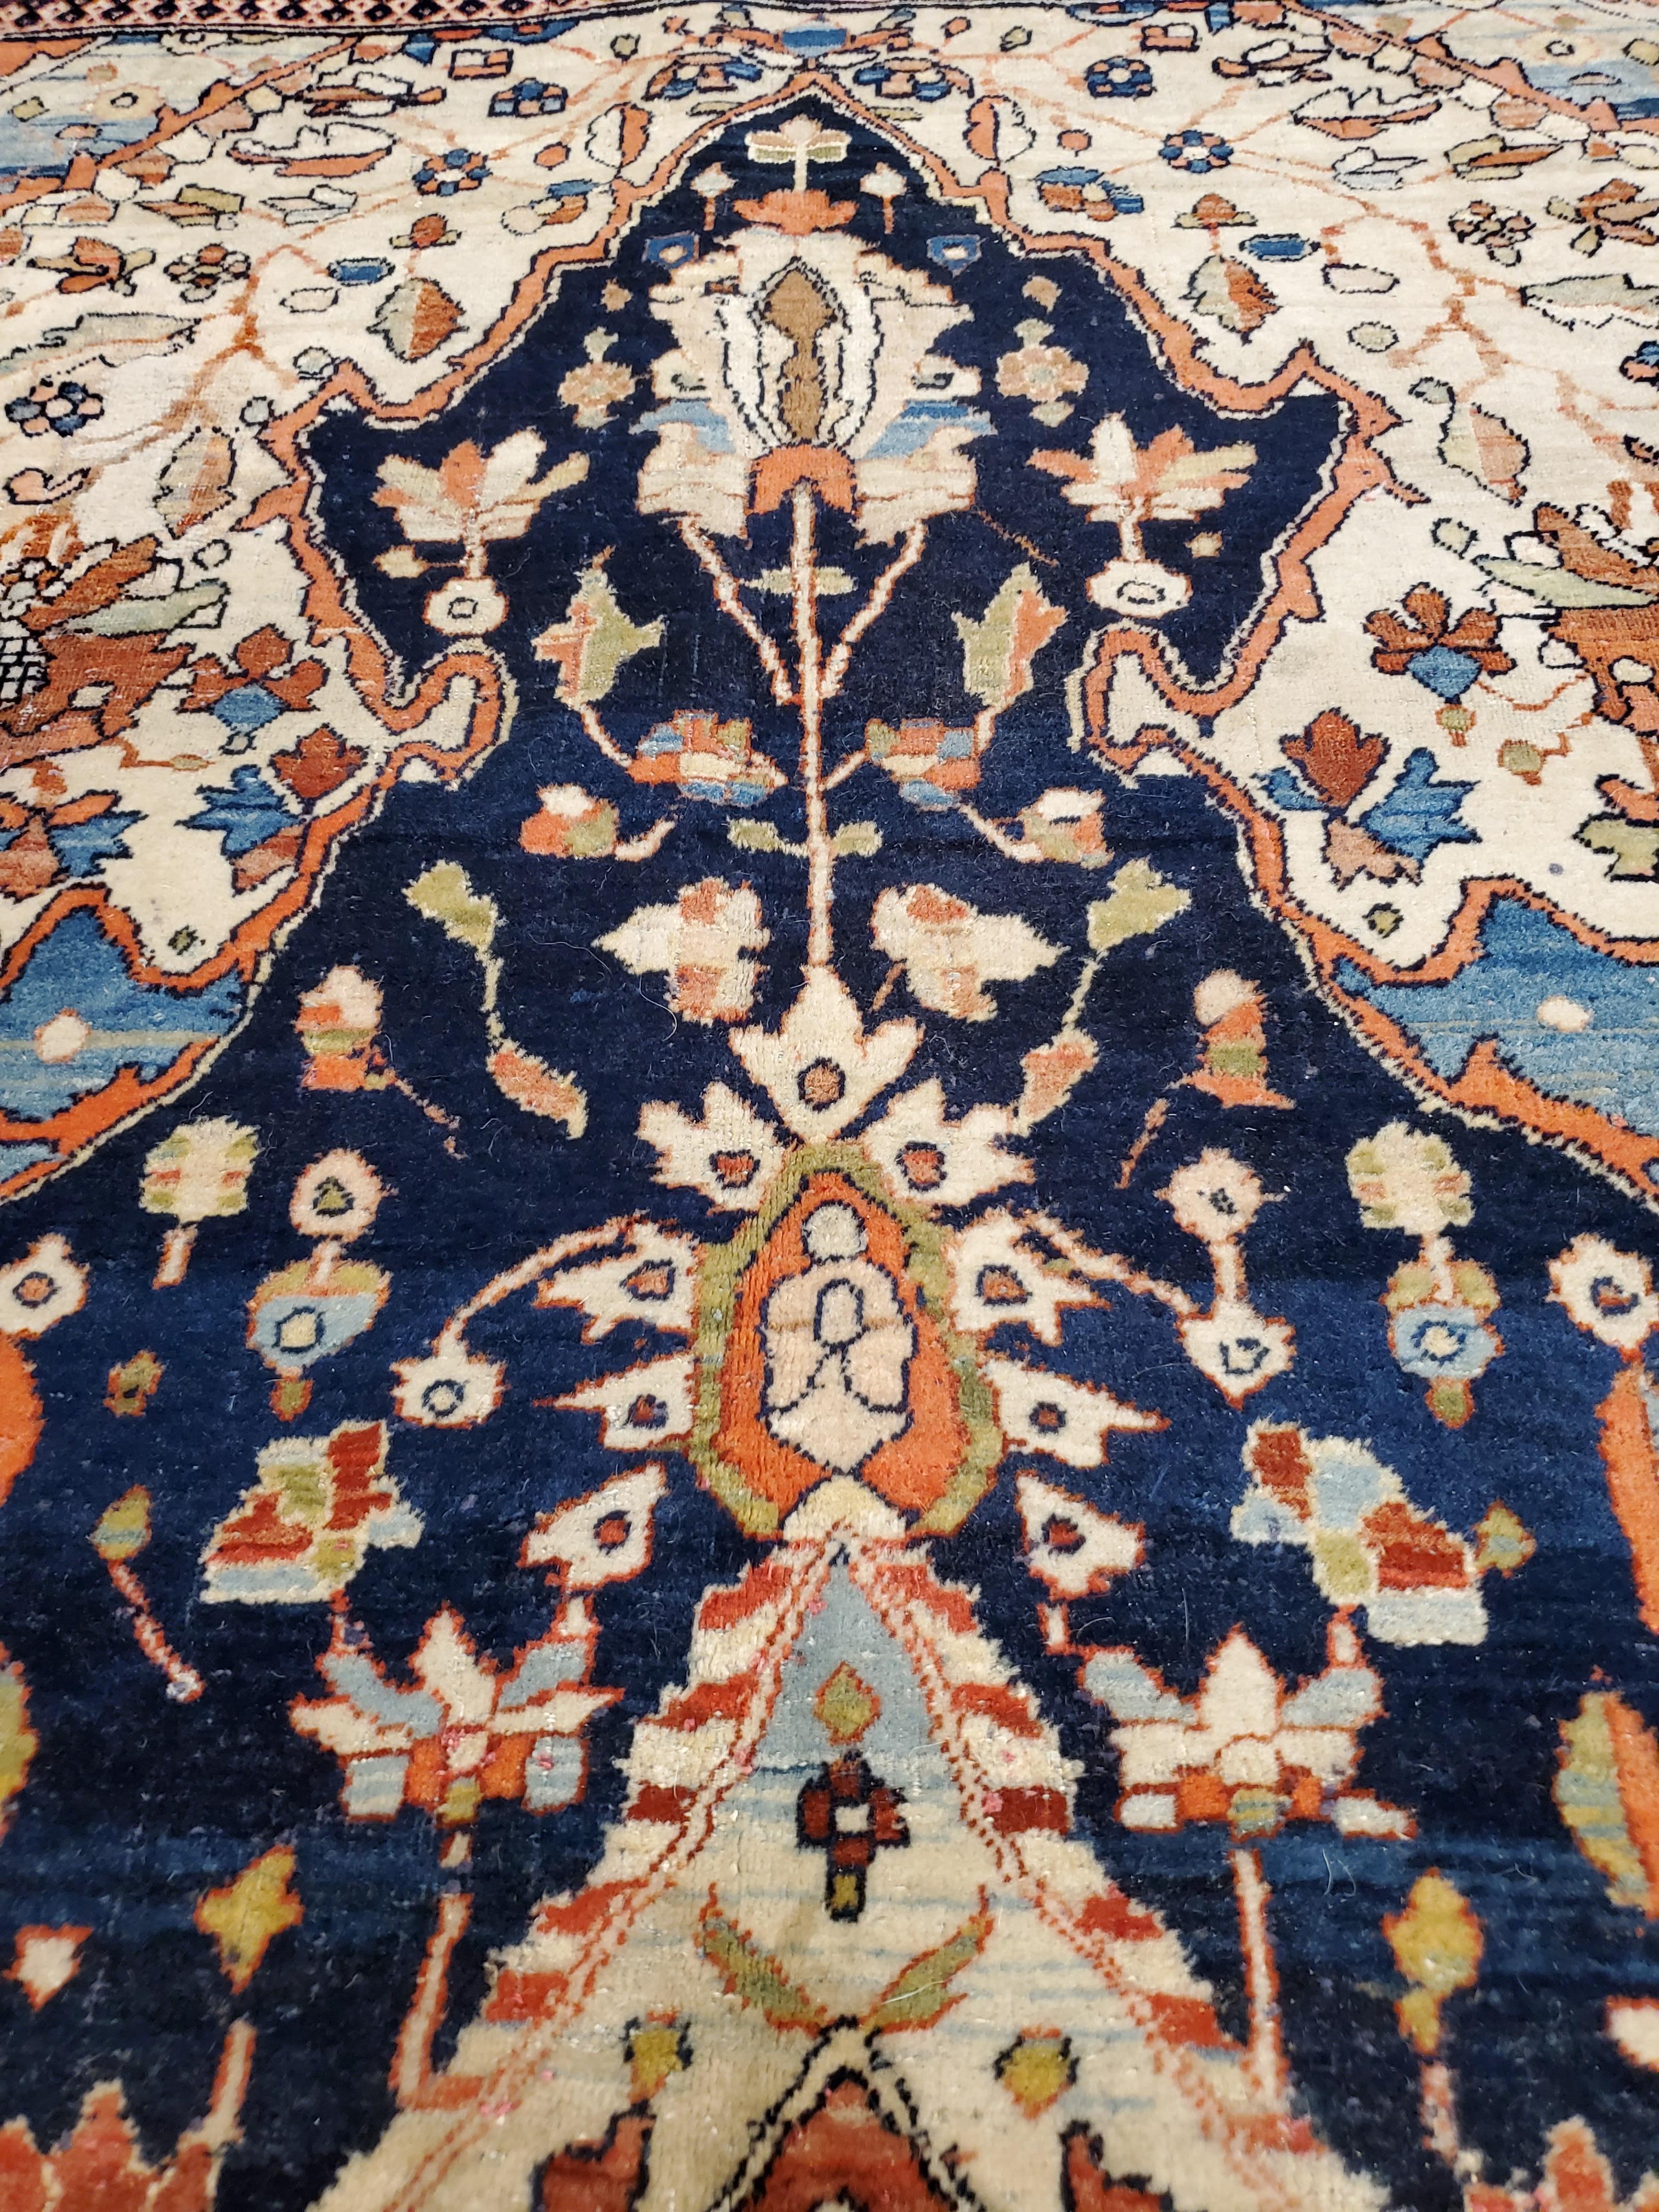 Antique Persian Mohtasham Kashan Carpet, Traditional, Ivory, Blue, Green, Reds 2